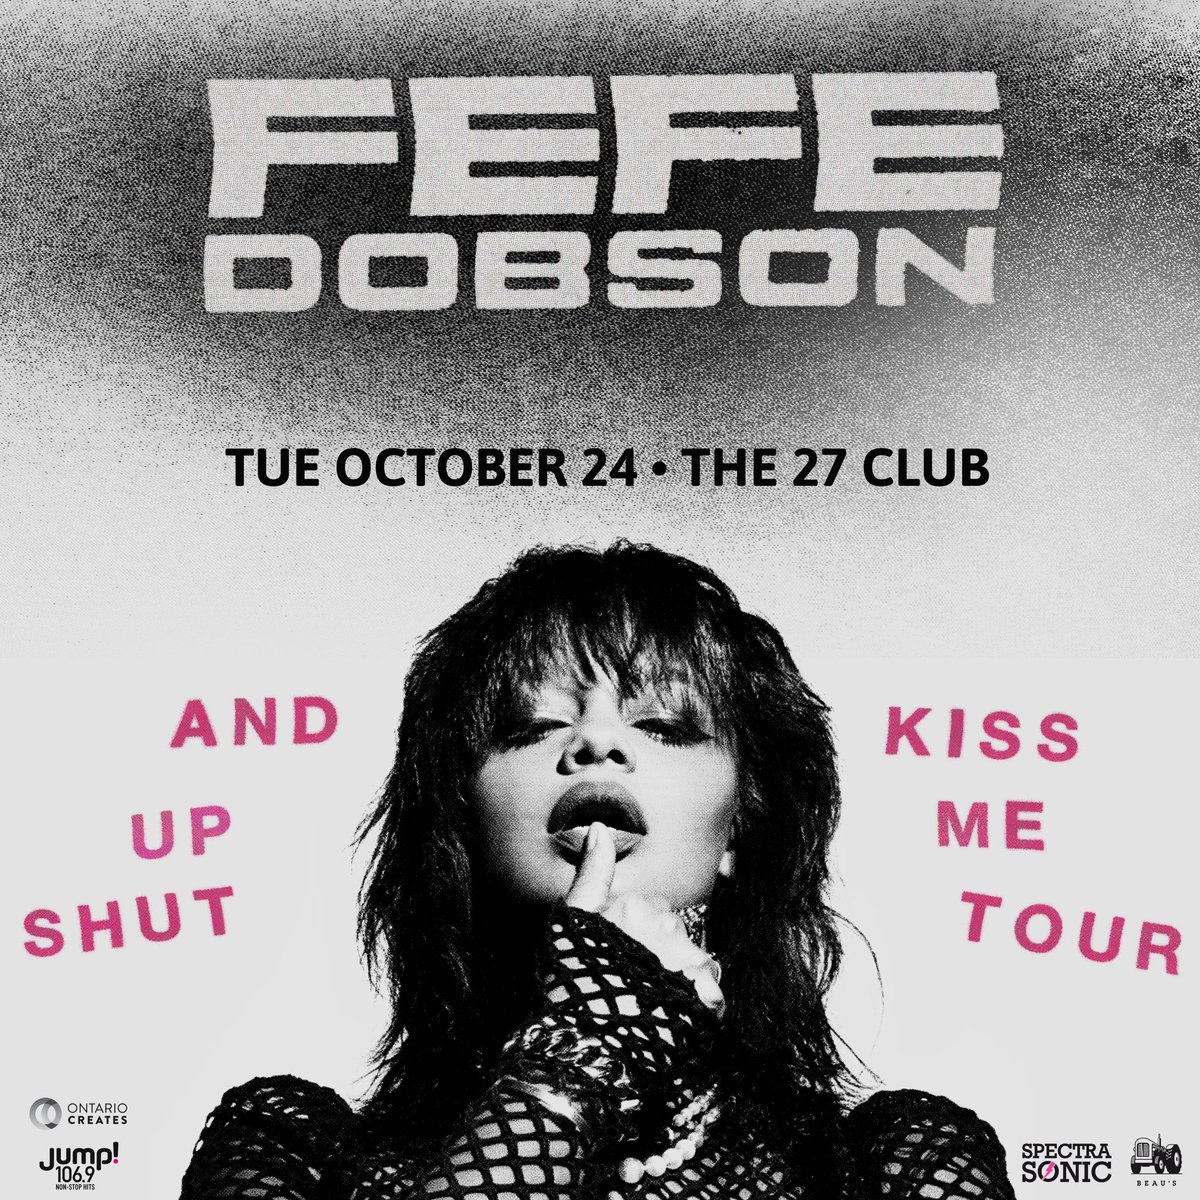 ON SALE NOW AND FLYING 🔥 @iamfefemusic Shut Up And Kiss Me Tour 💋 Tue Oct 24 @the27clubottawa 🎟️ spectrasonic.com & @vertigoottawa #thiswillsellout #youvebeenwarned